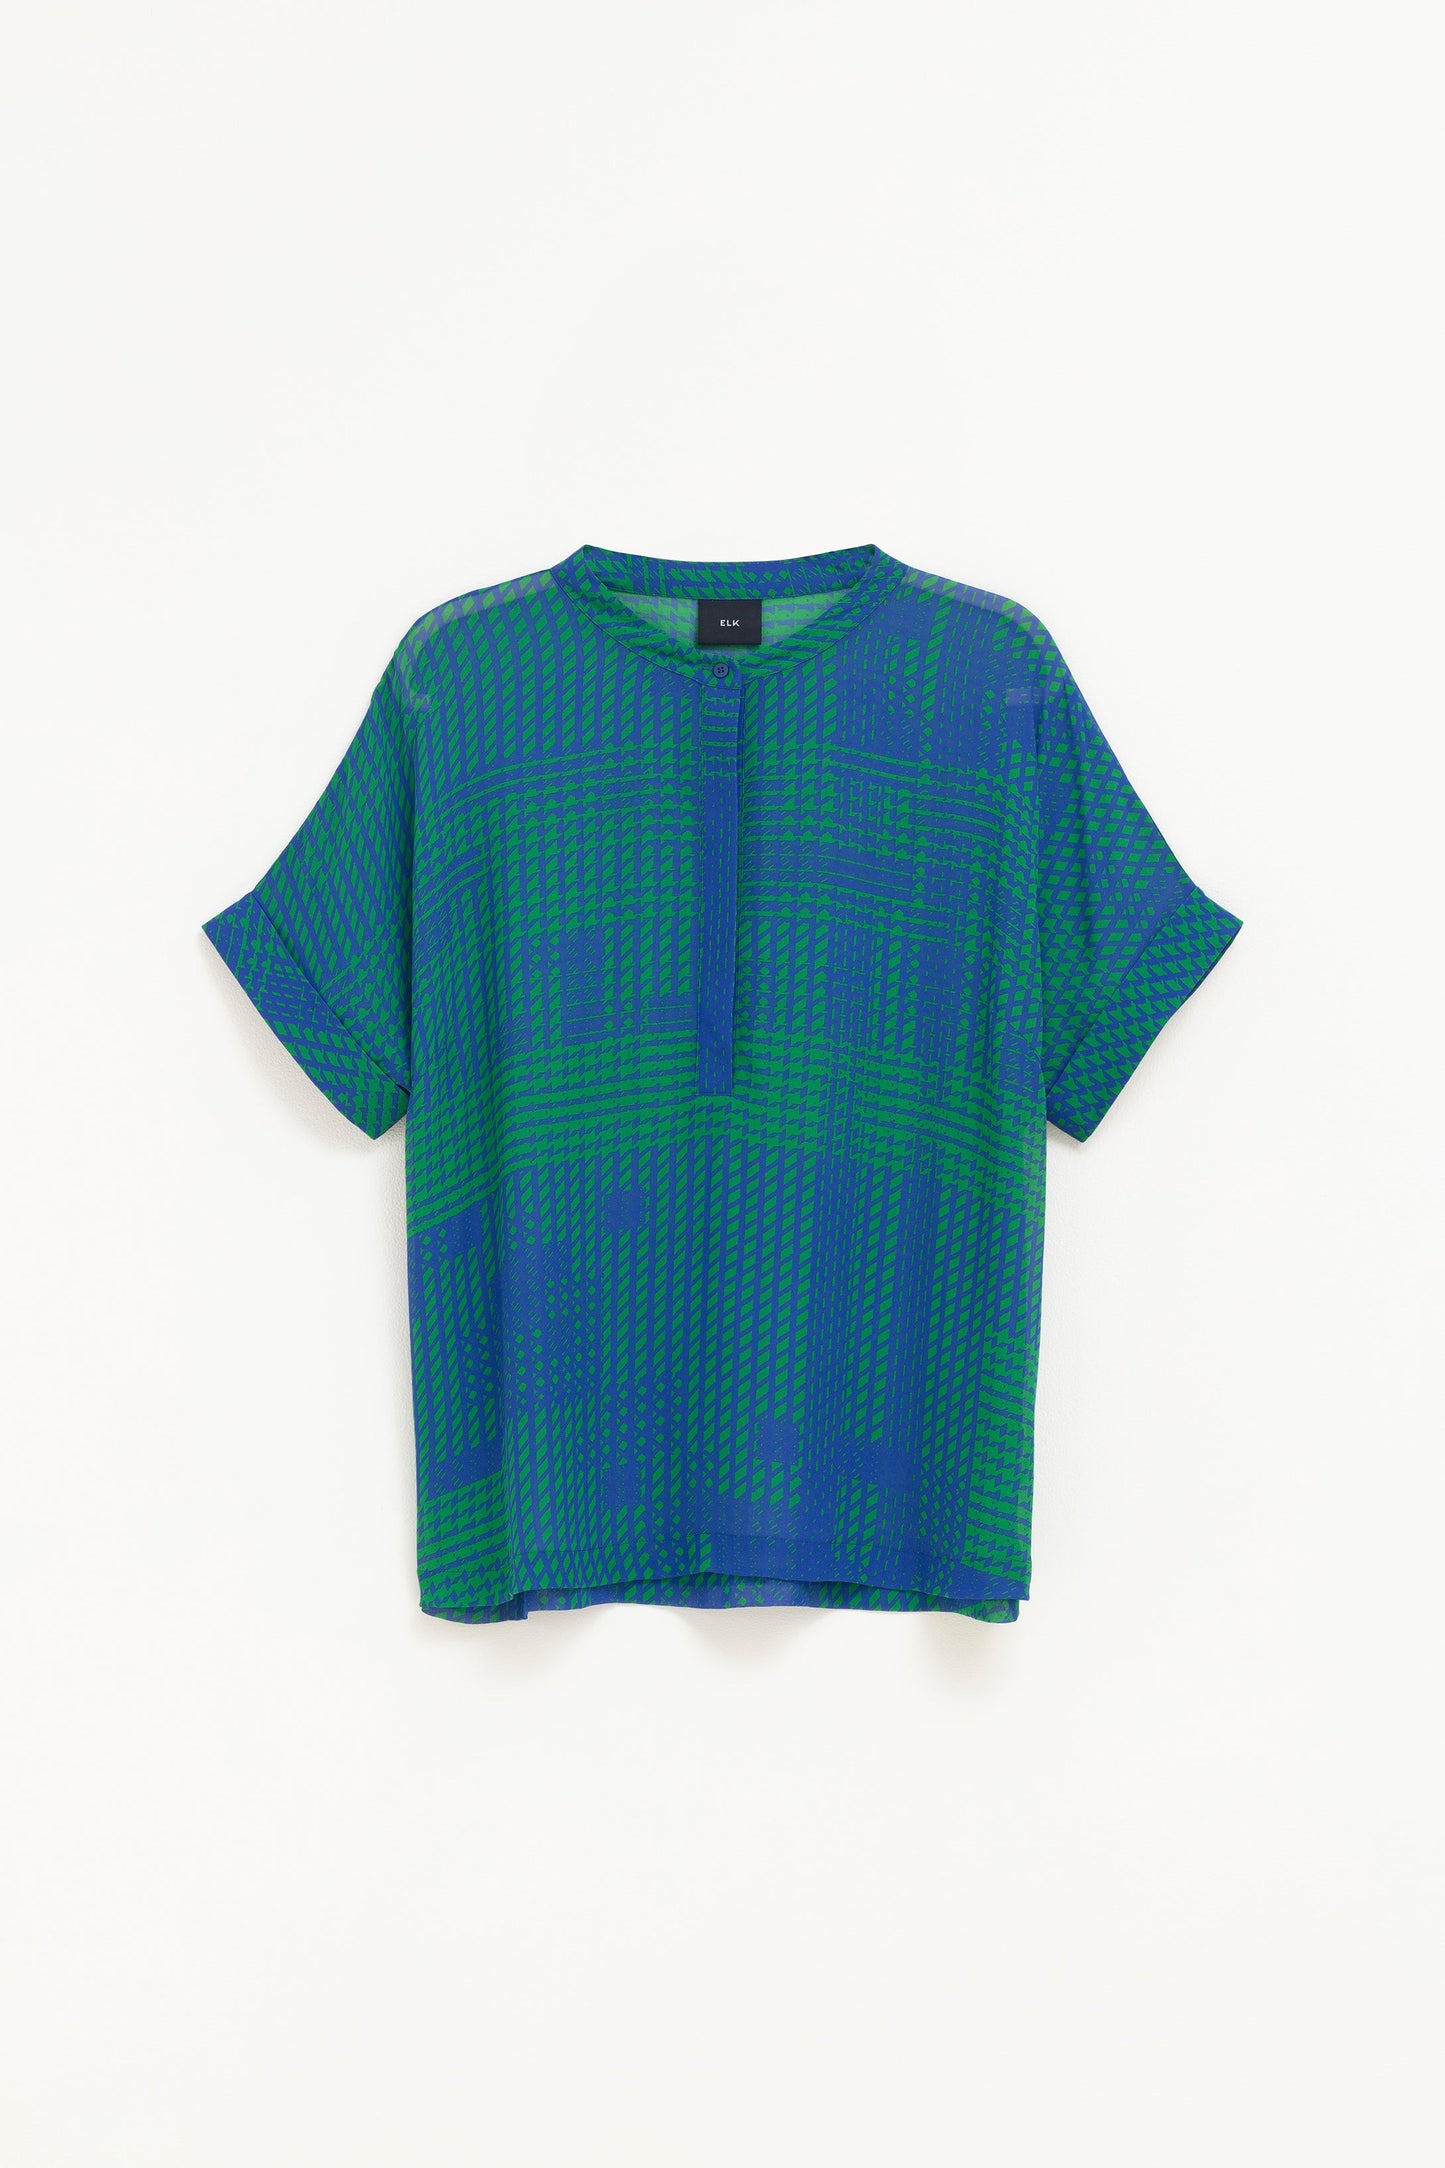 Lukko Sheer Print Collarless Short sleeve Shirt Front | TEAL CROSS STITCH PRINT